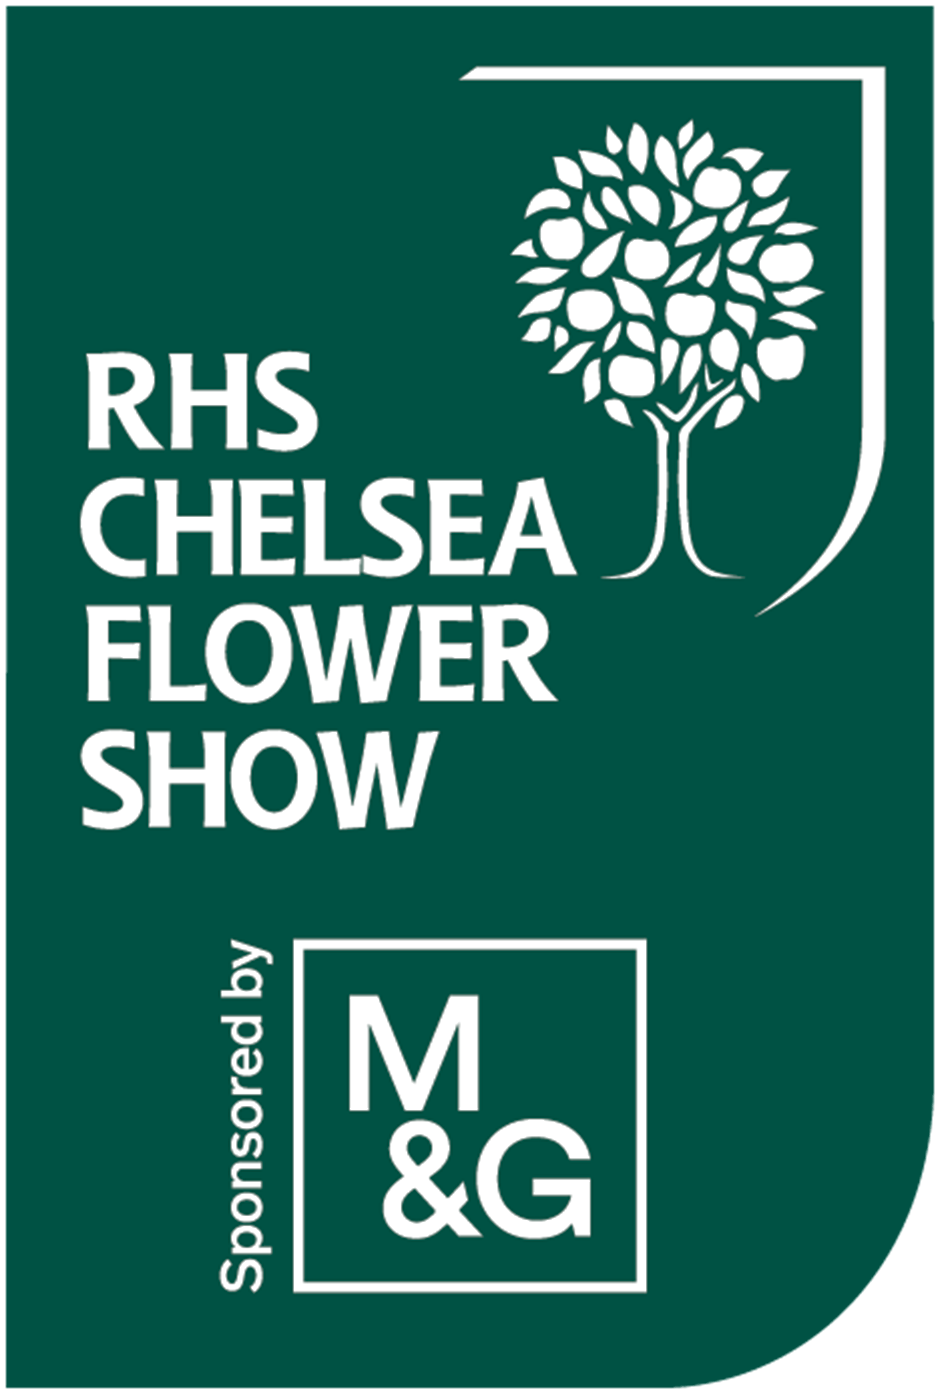 M G Sponsor Of The Rhs Chelsea Flower Show Rhs Gardening